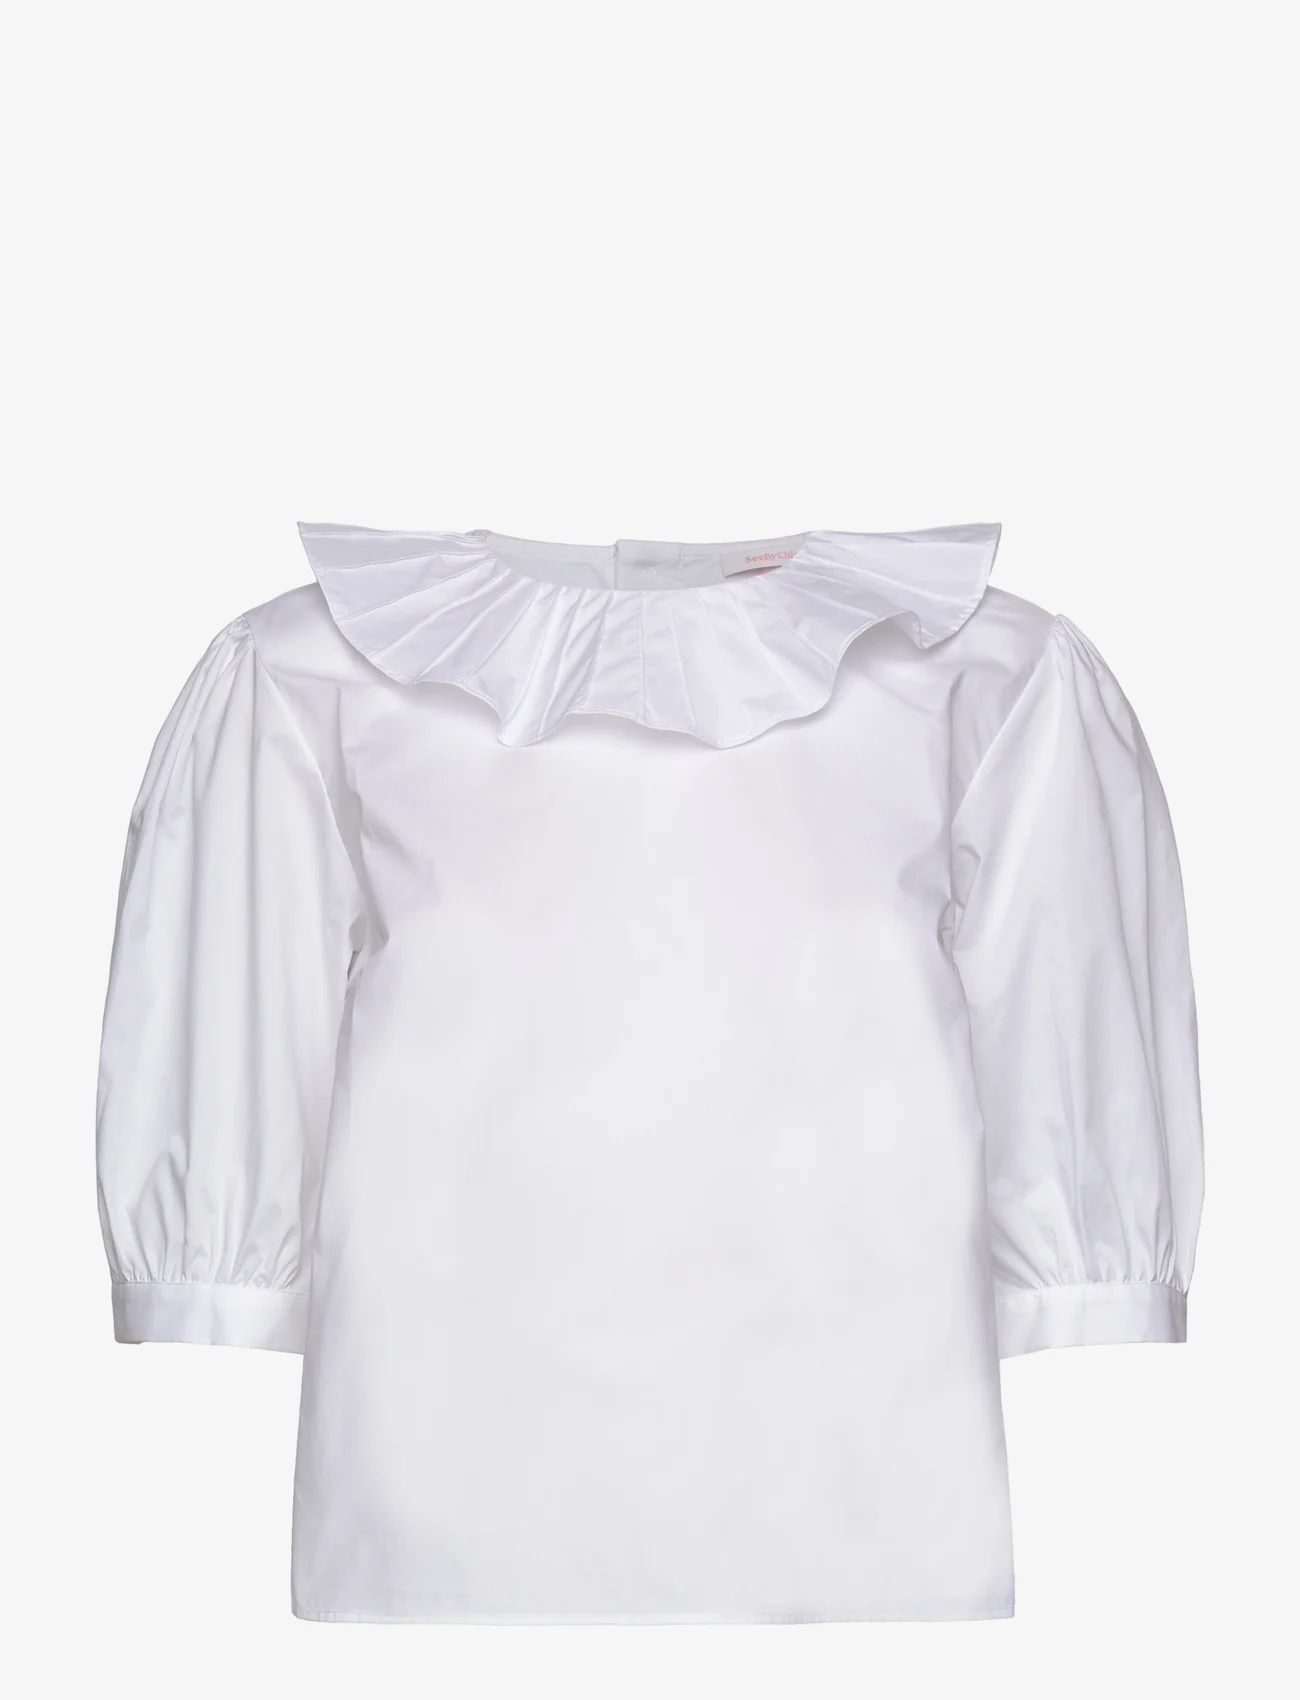 See by Chloé - Top - blouses korte mouwen - white - 0